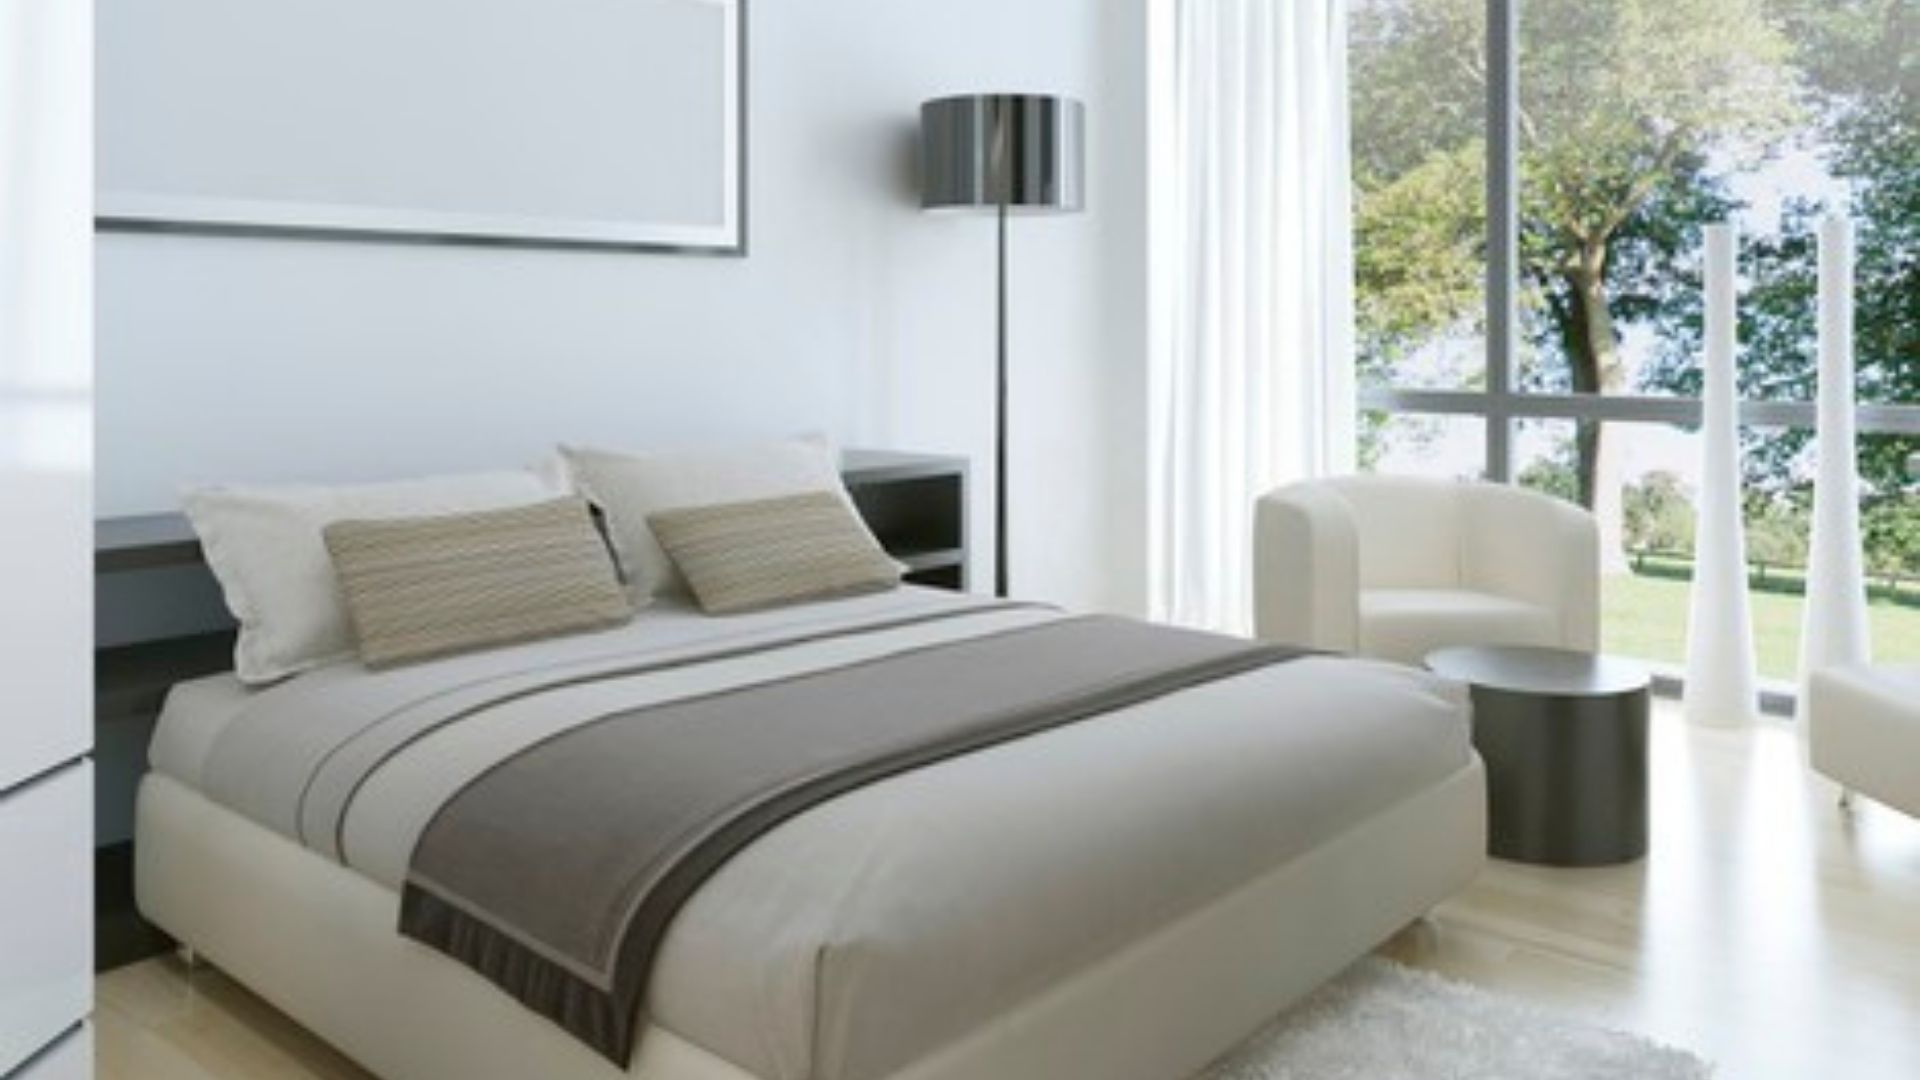 luxury mattress sale uk